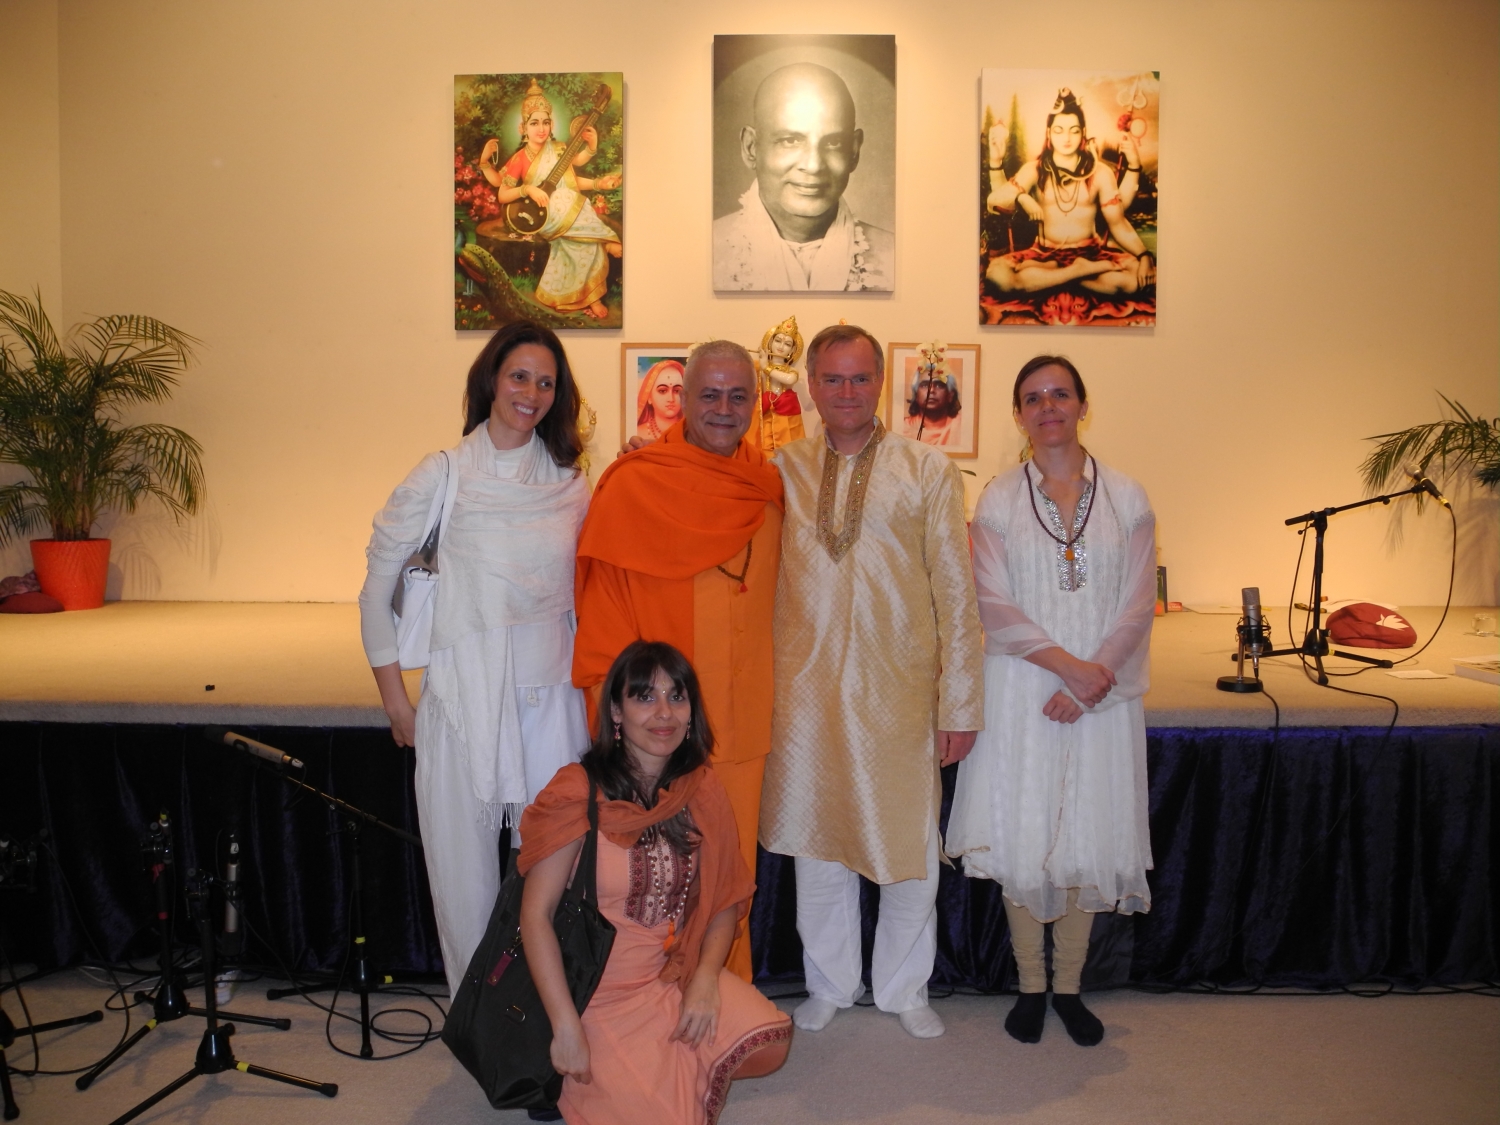 Meeting of H.H. Jagat Guru Amrta Sūryānanda Mahā Rāja with Master Sukadev Bretz - Yoga Vidya, Bad Meinberg, Germany - 2012, March